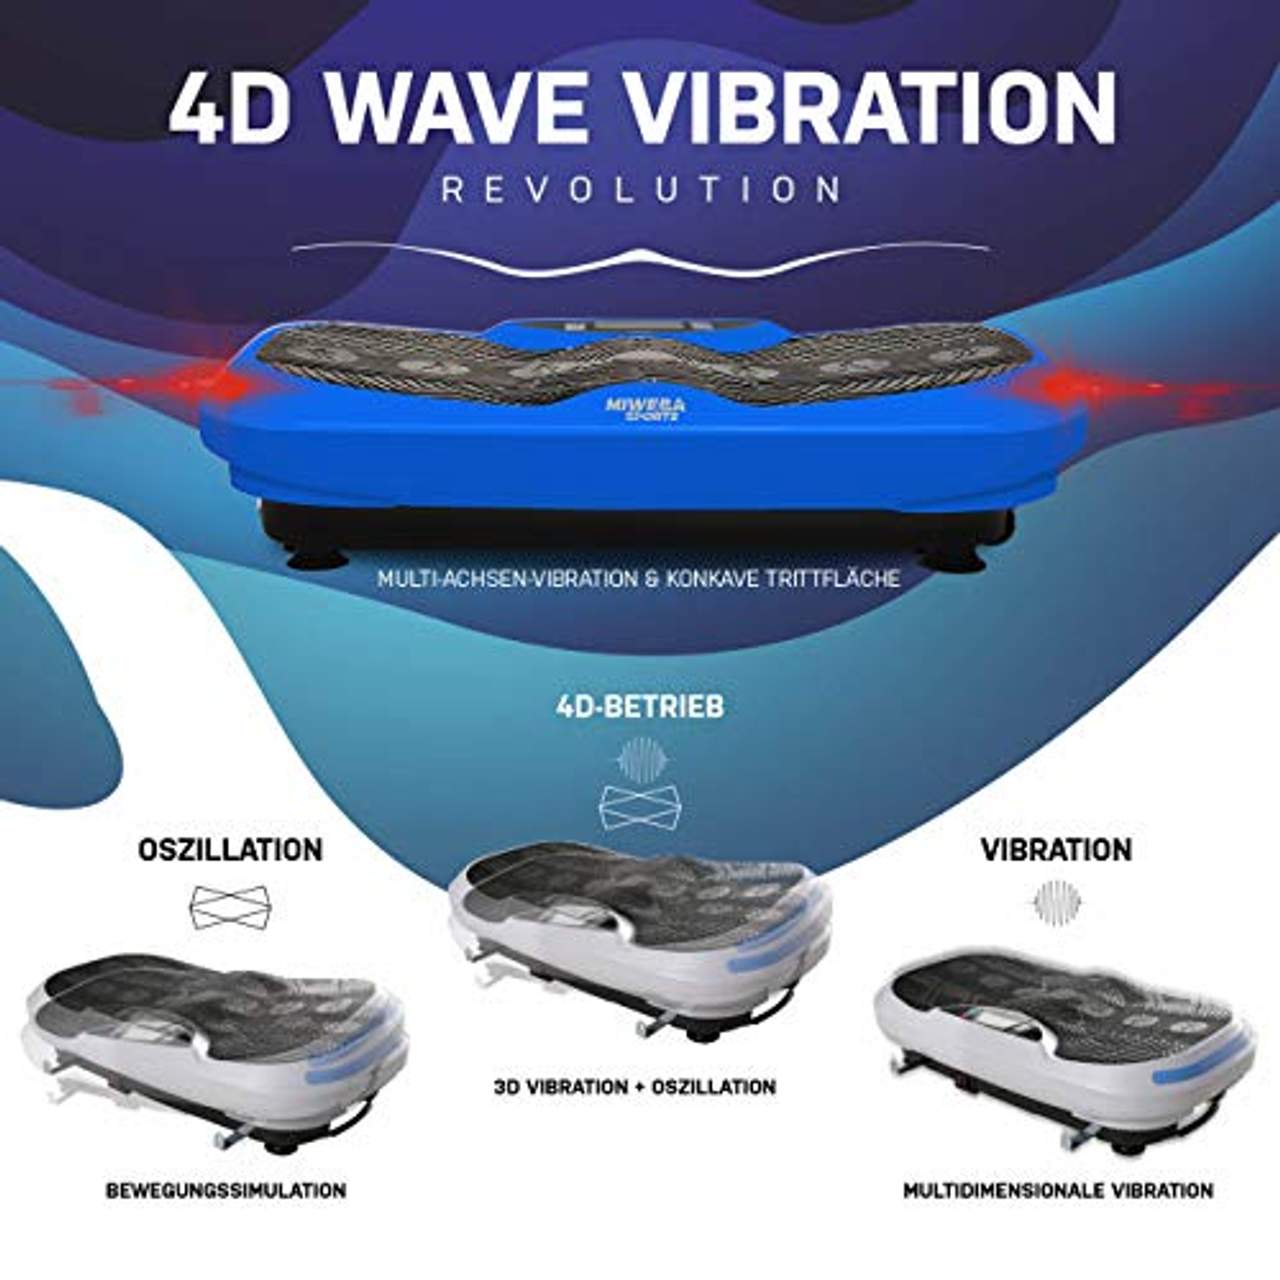 Miweba Sports Fitness 4D Wave Vibrationsplatte MV300